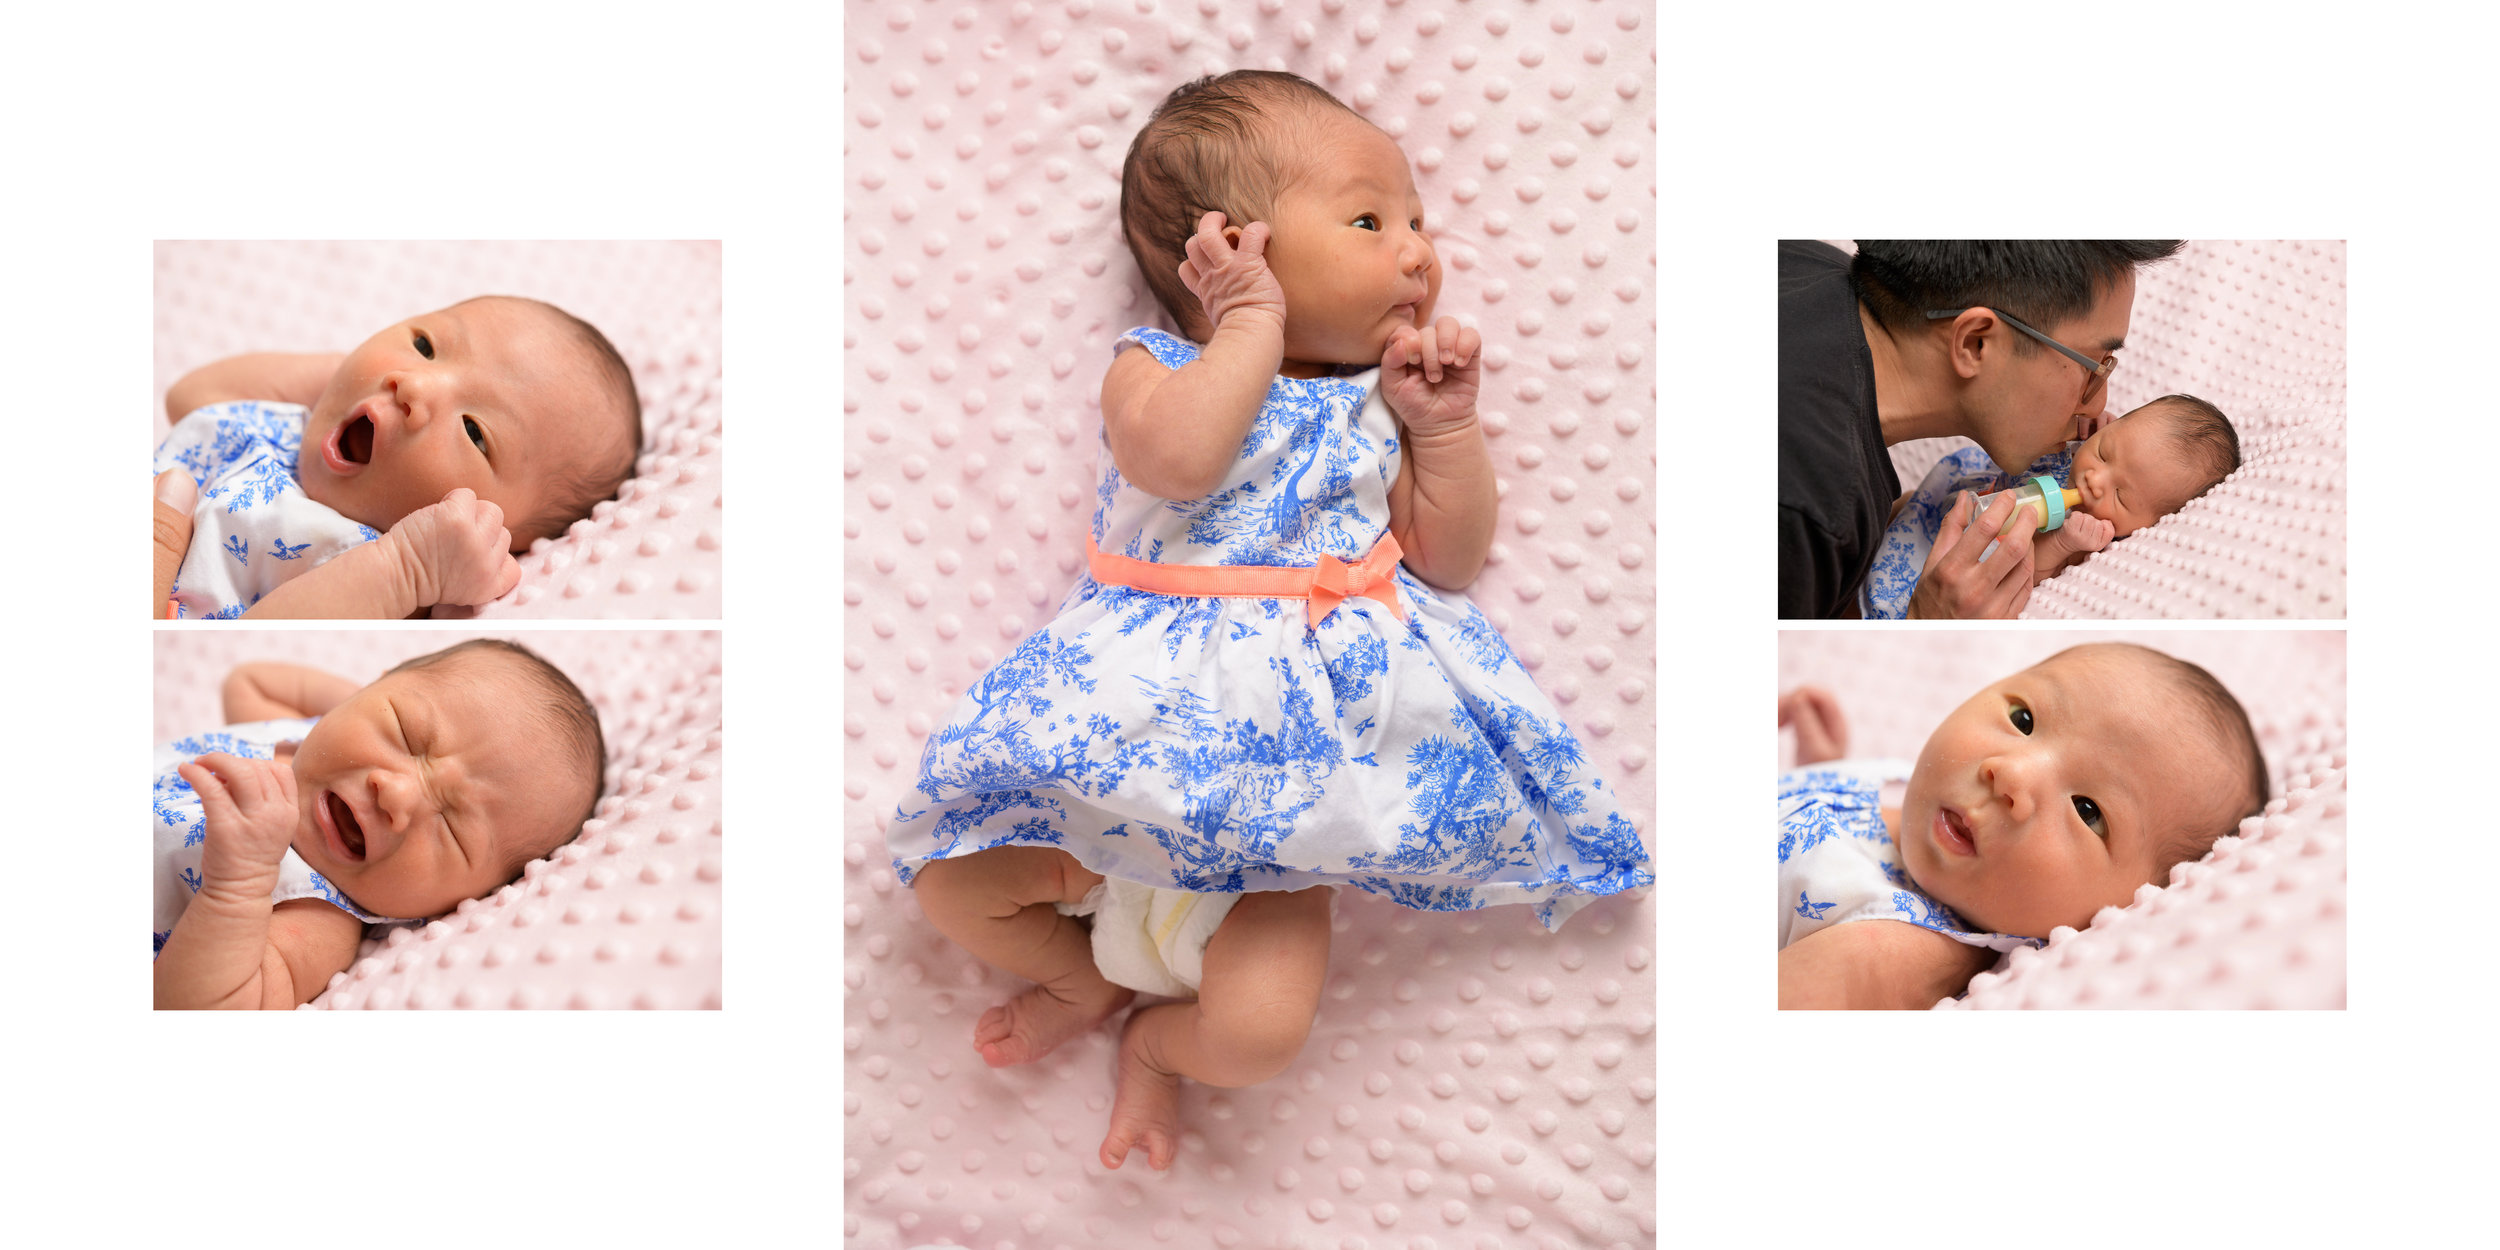 Capitola Newborn Family Photography - photos by Bay Area portrai